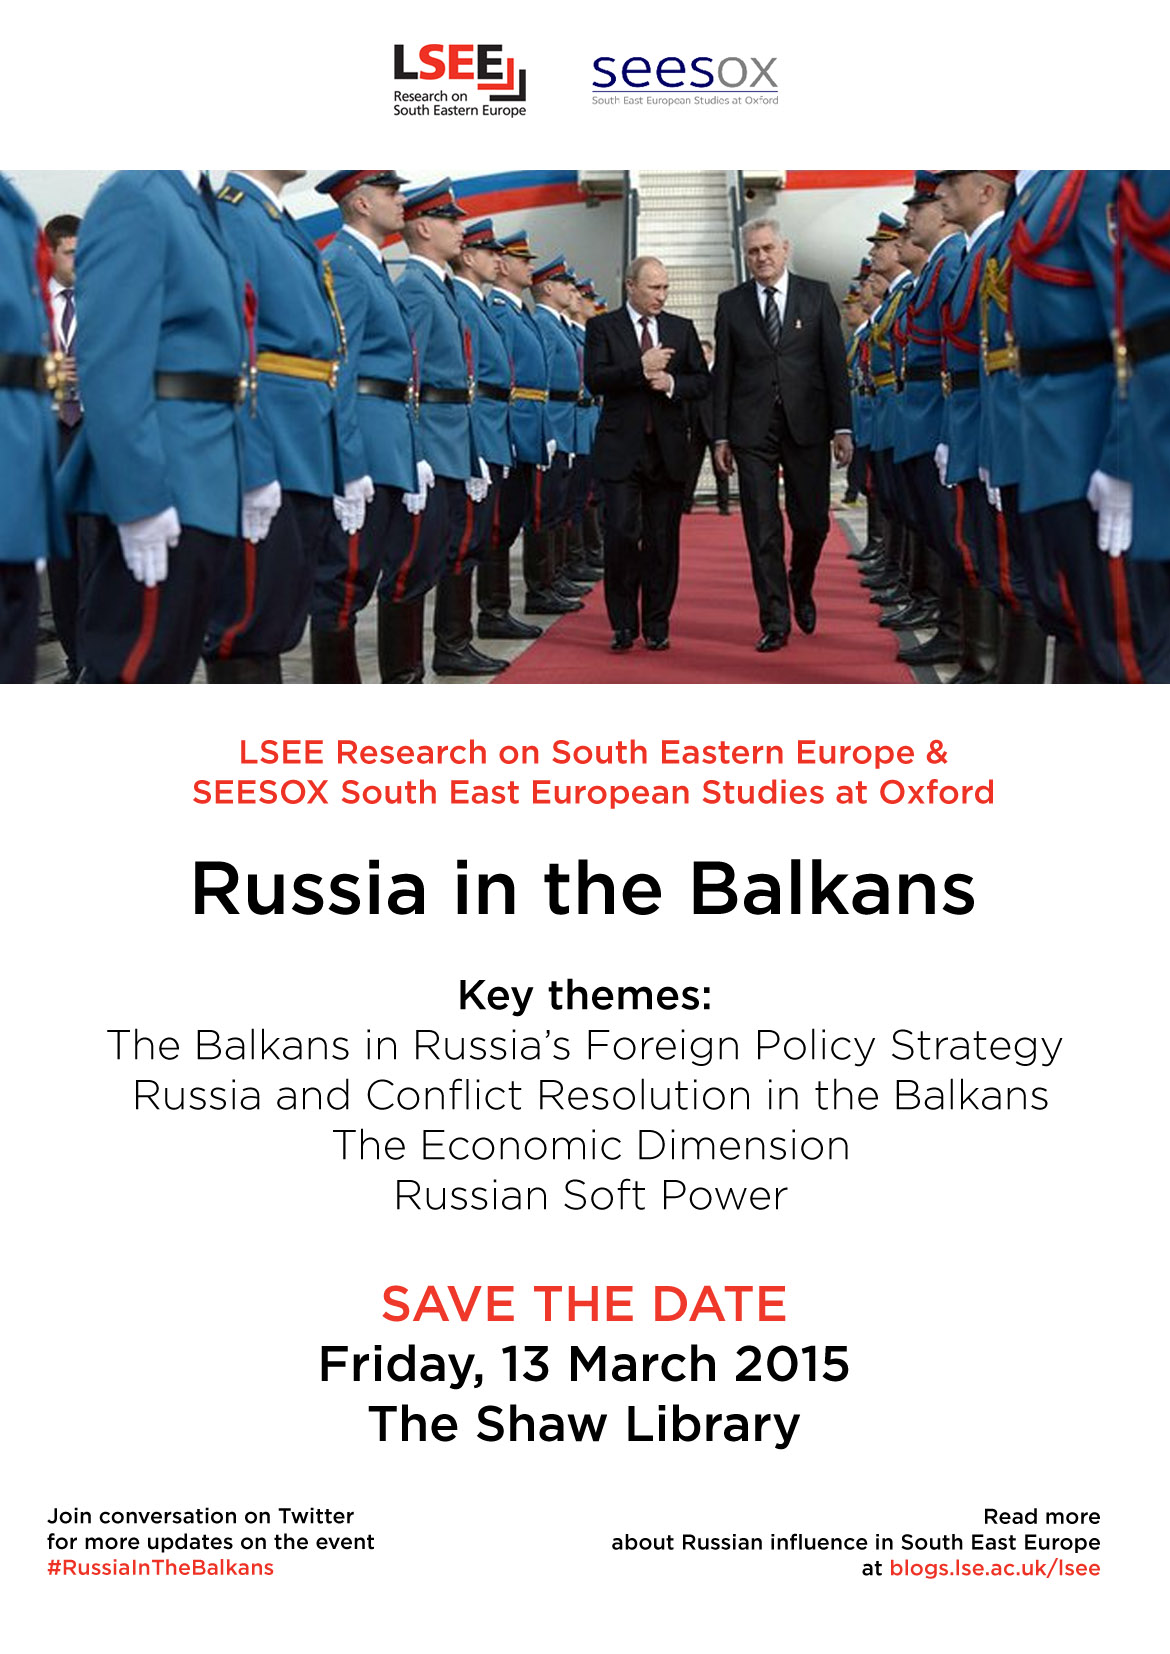 Russia in the Balkans poster - Dec 2014